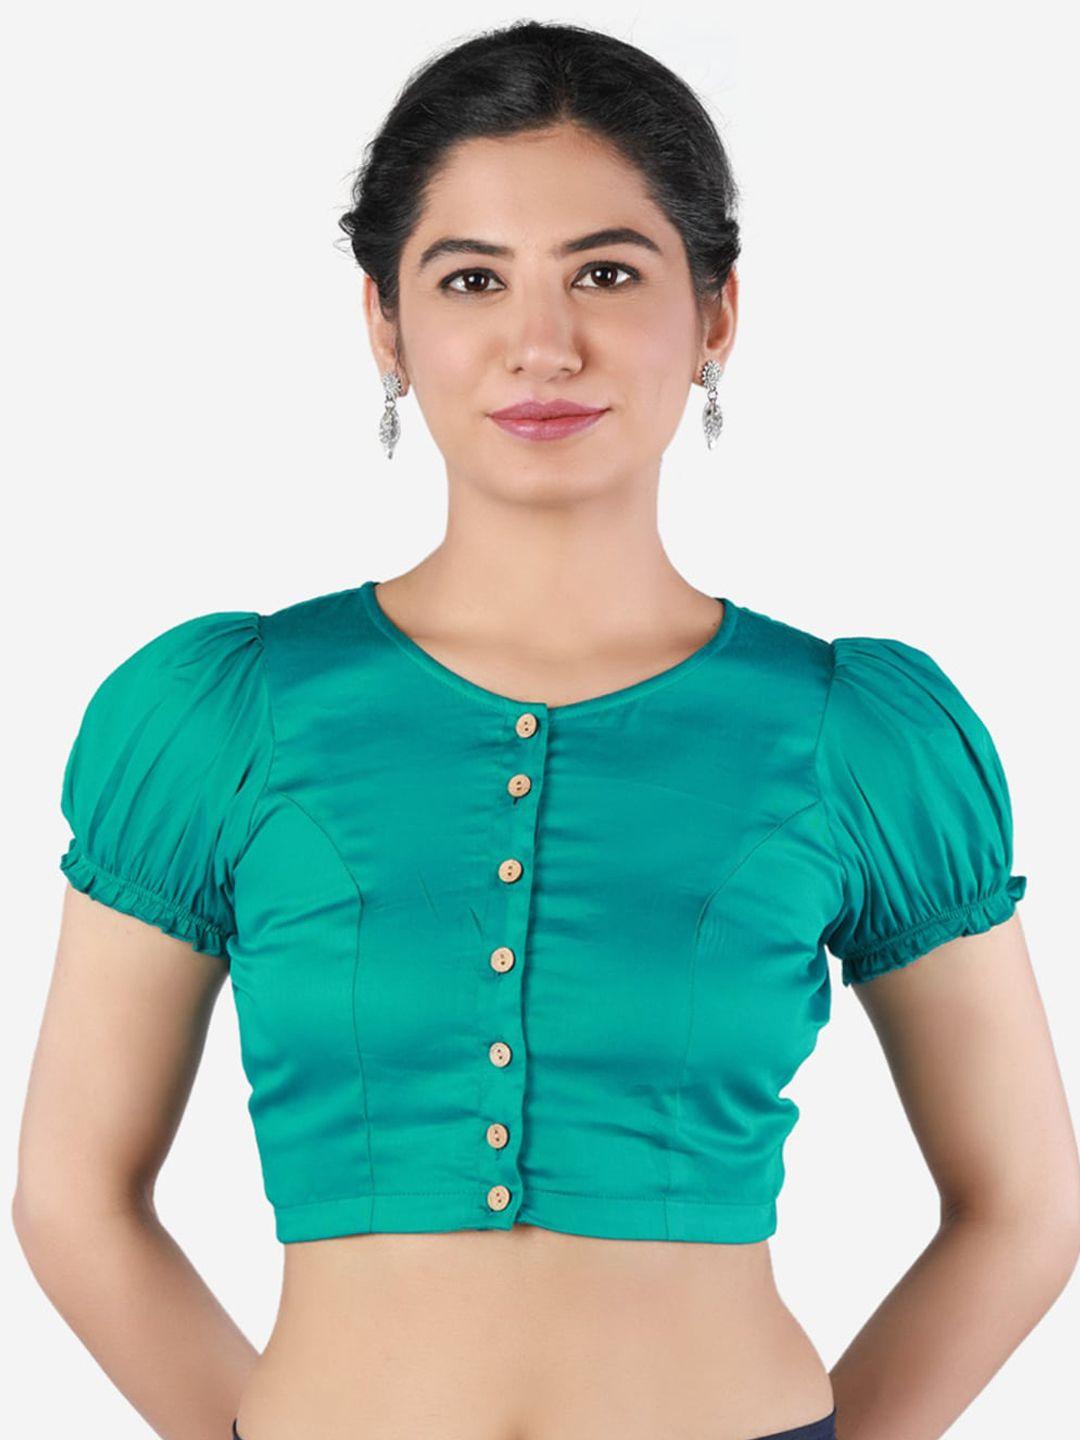 llajja-women-teal-green-solid-pure-cotton-saree-blouse